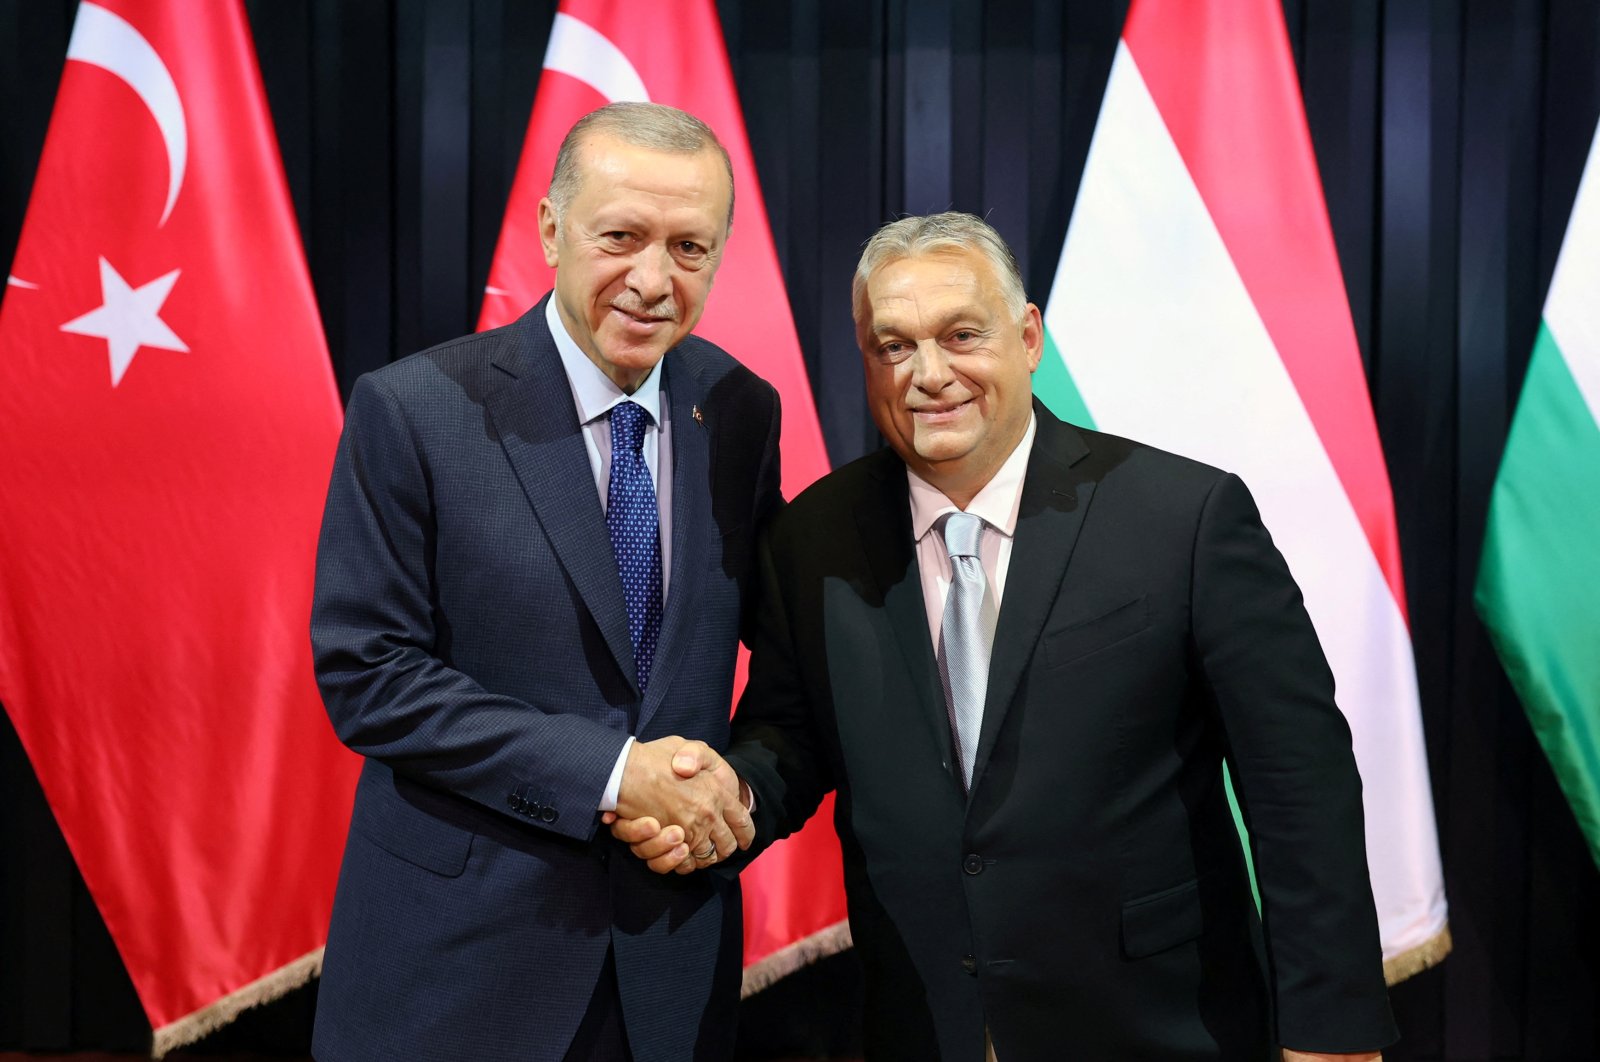 Erdoğan, guest of Viktor Orban, embarks on Hungary trip | Daily Sabah